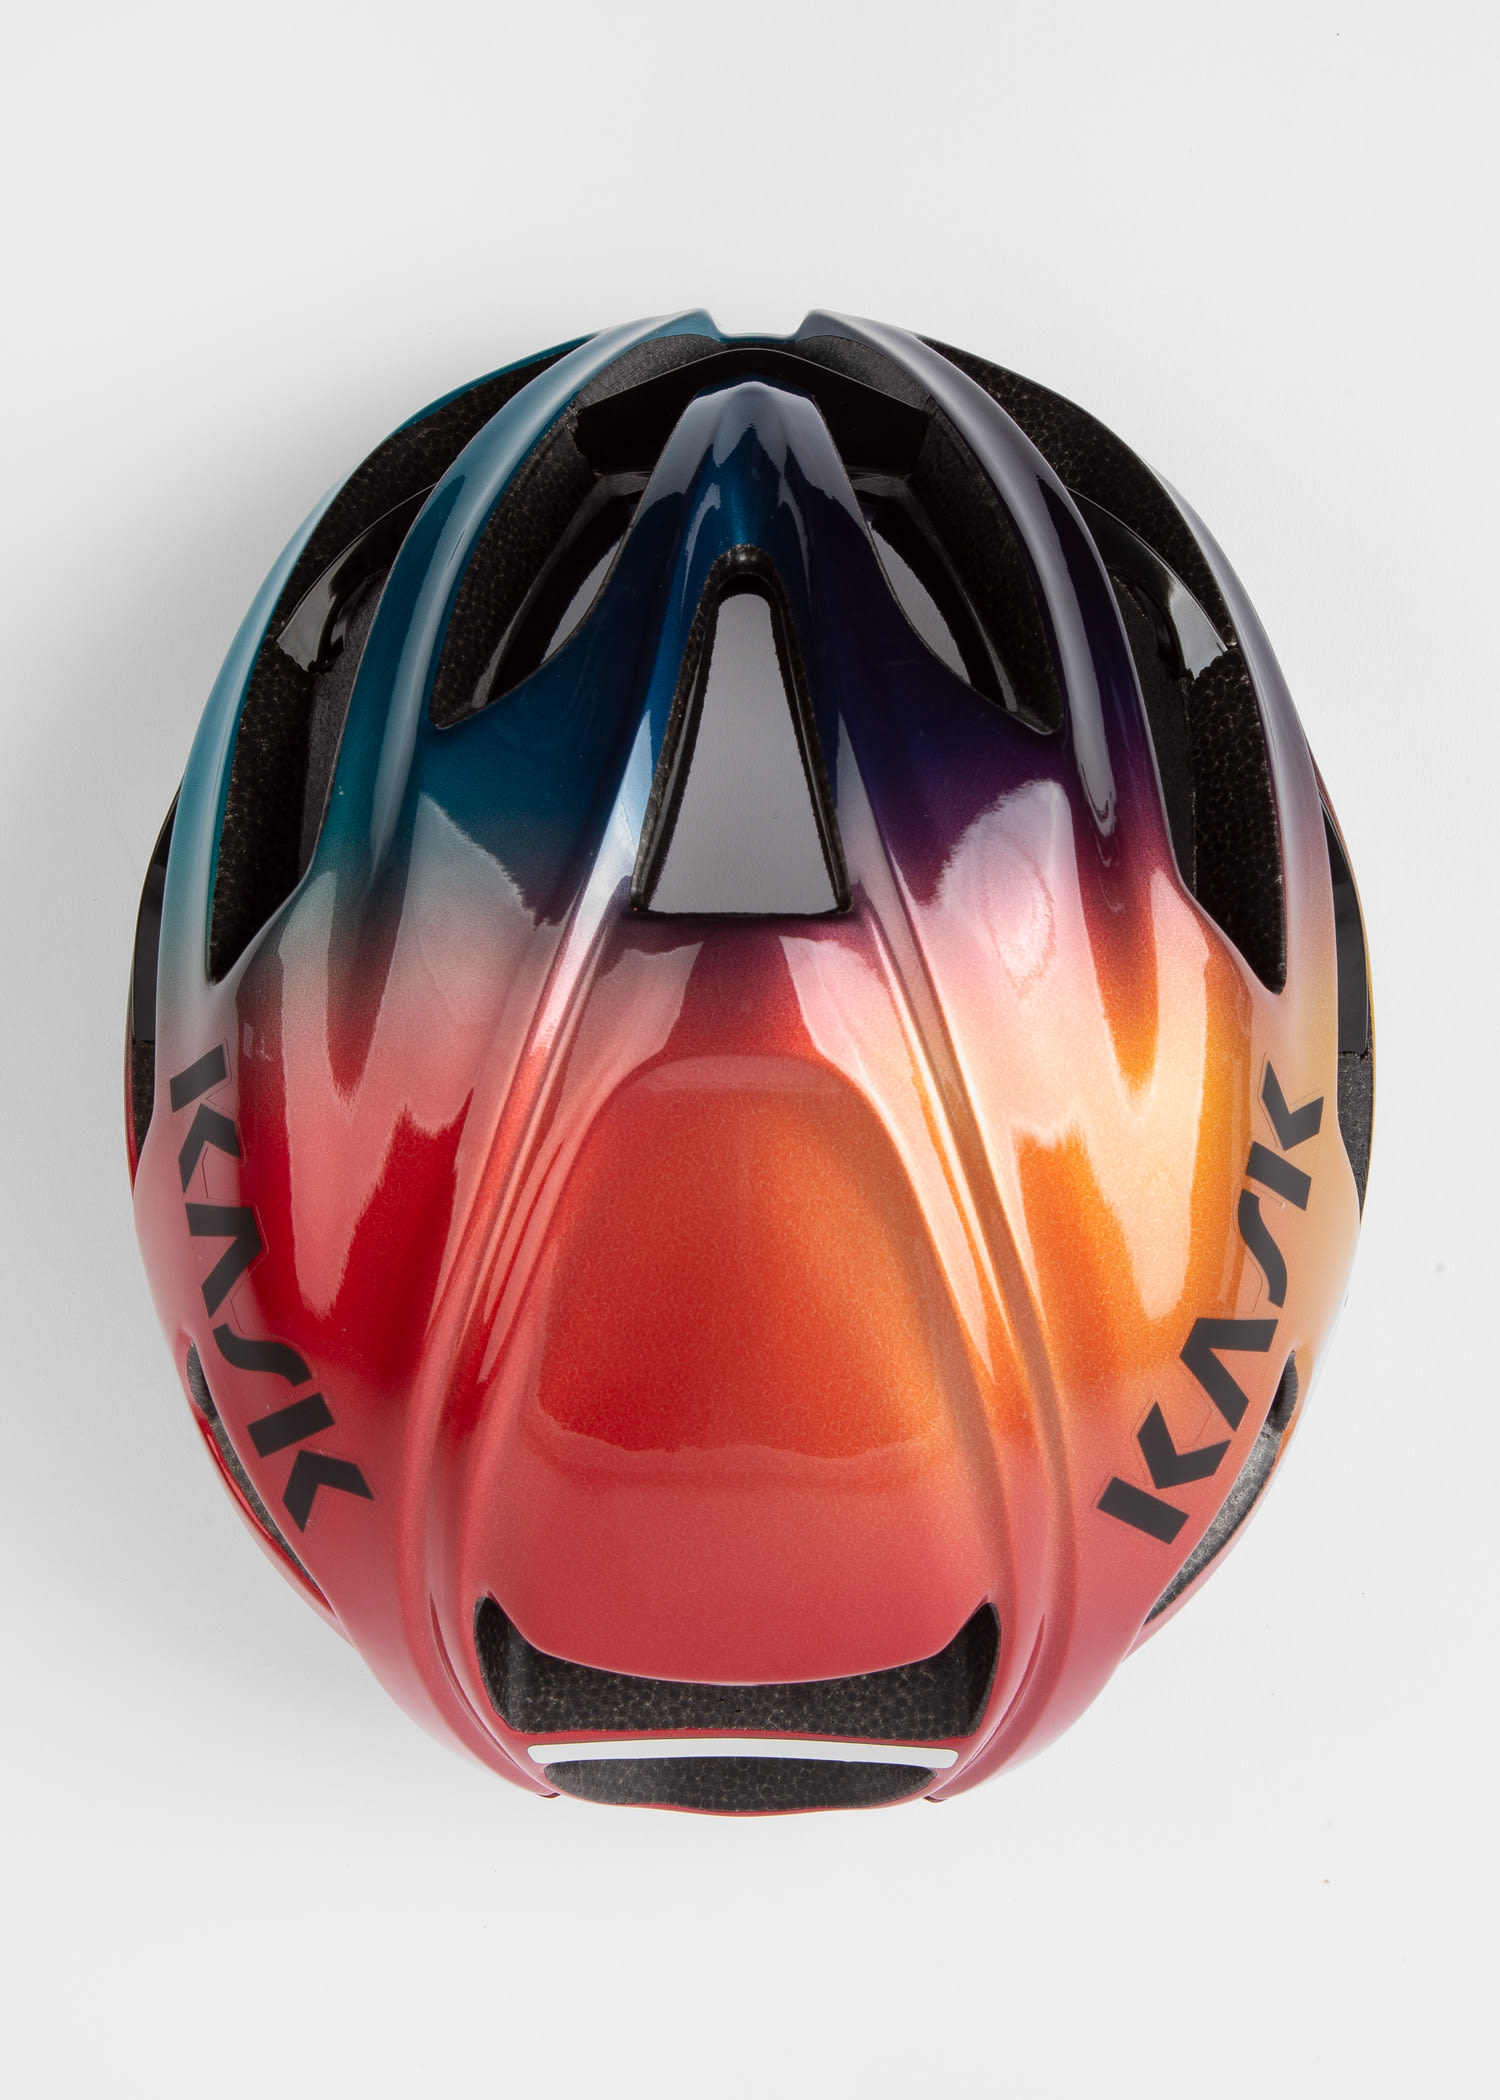 Paul Smith + Kask 'Artist Stripe Fade' Proton Cycling Helmet - Paul Smith